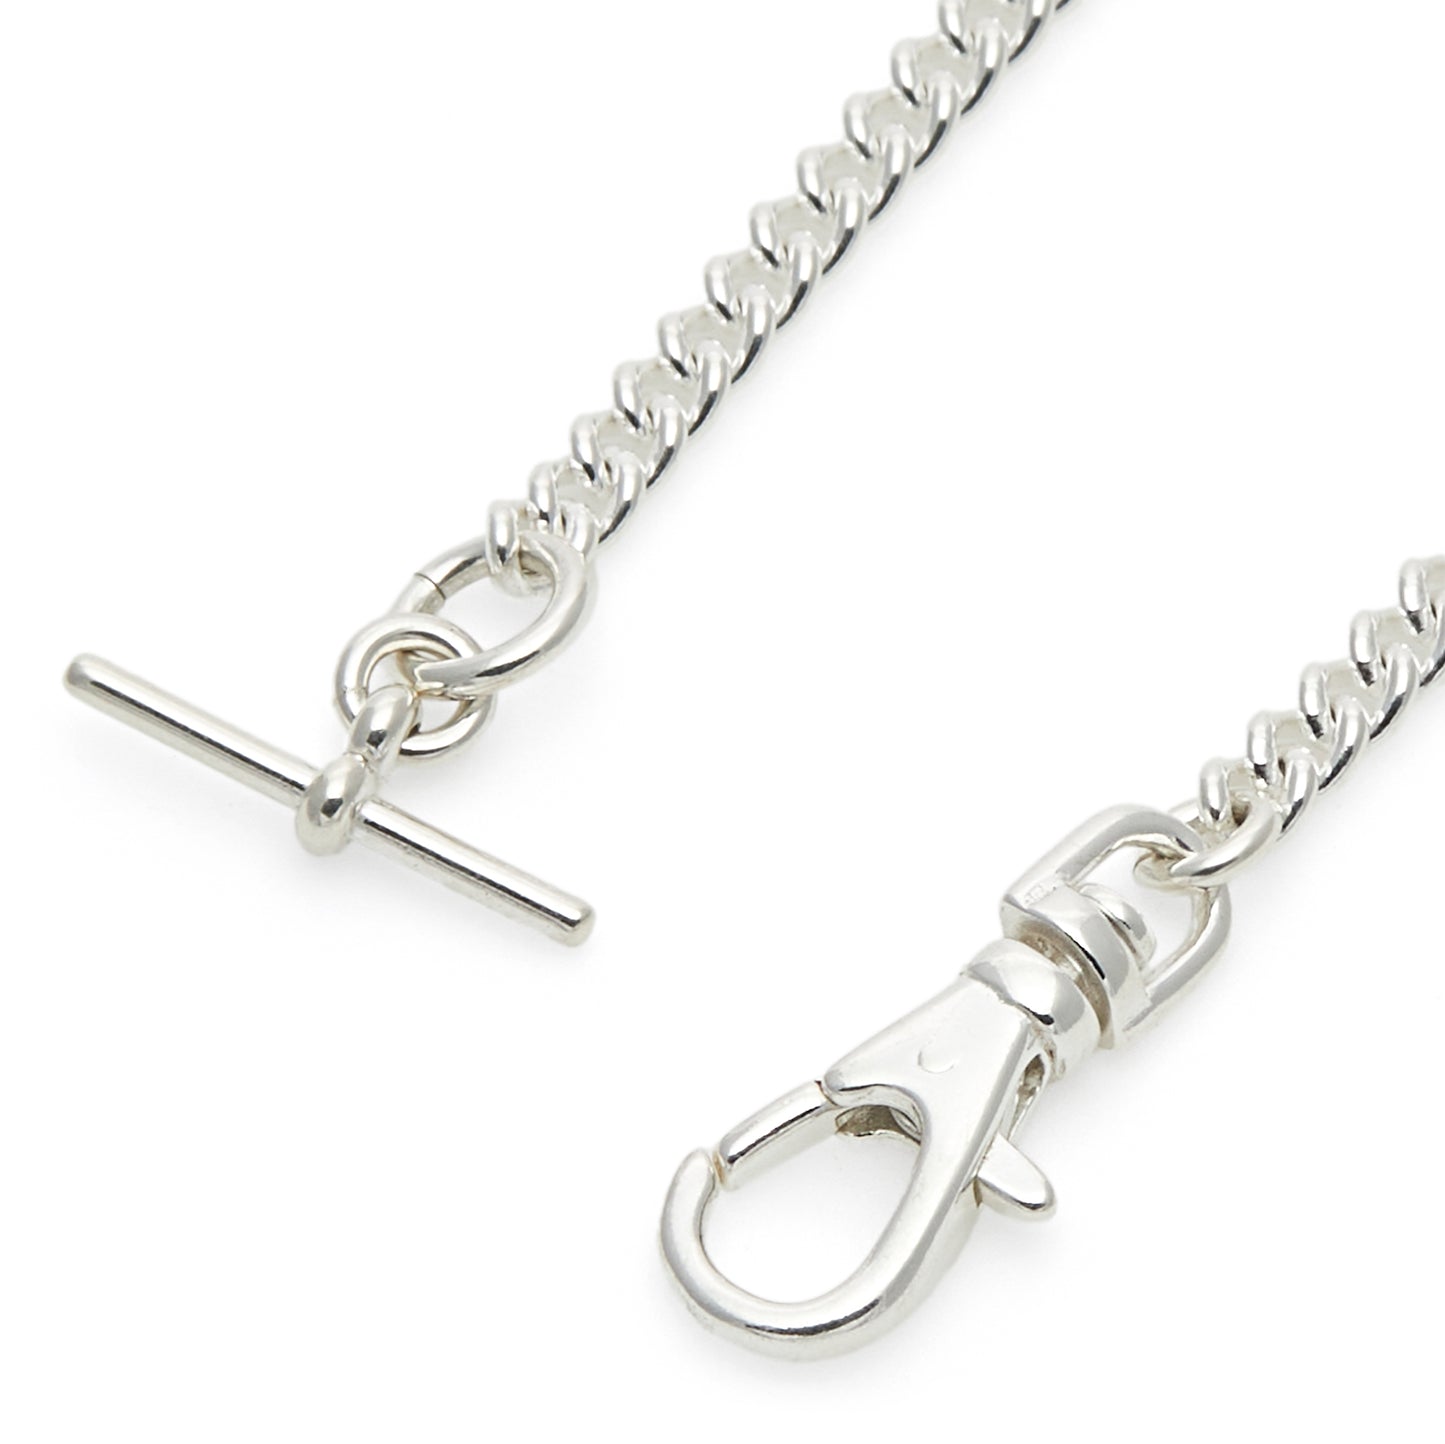 MARTINE ALI Onyx Curb Charm Chain (Silver)